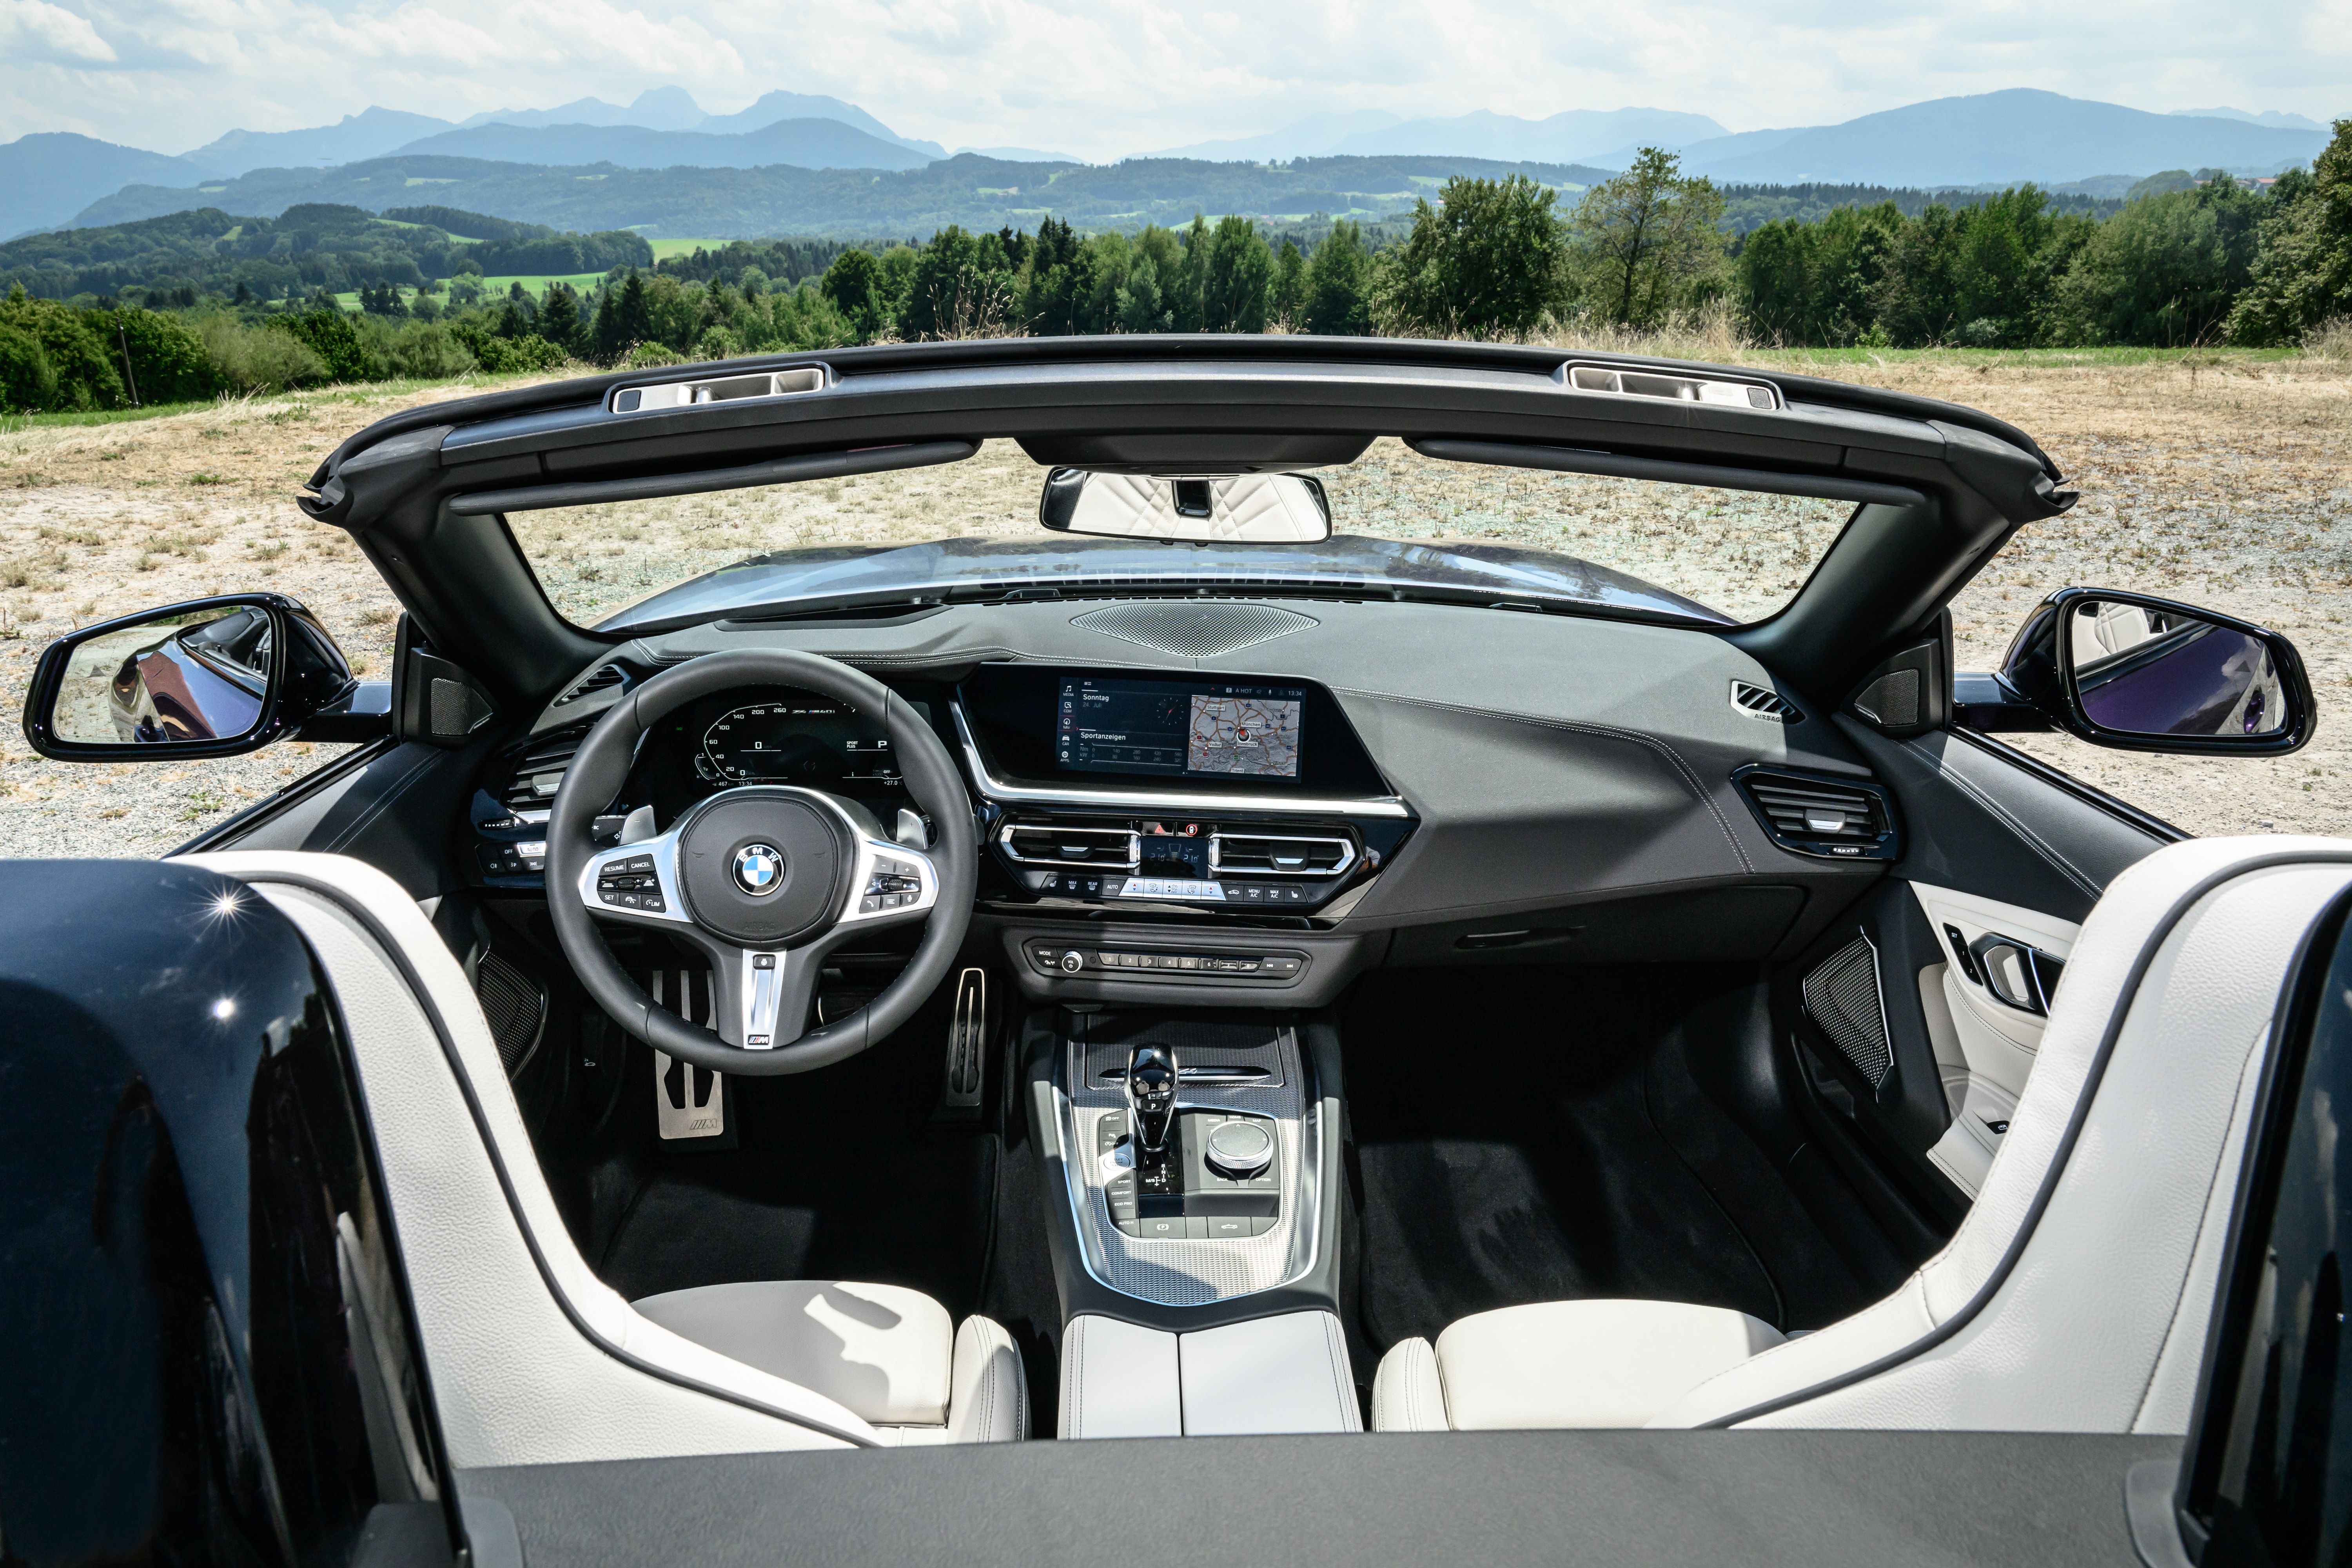 BMW Z4 interior - Cockpit